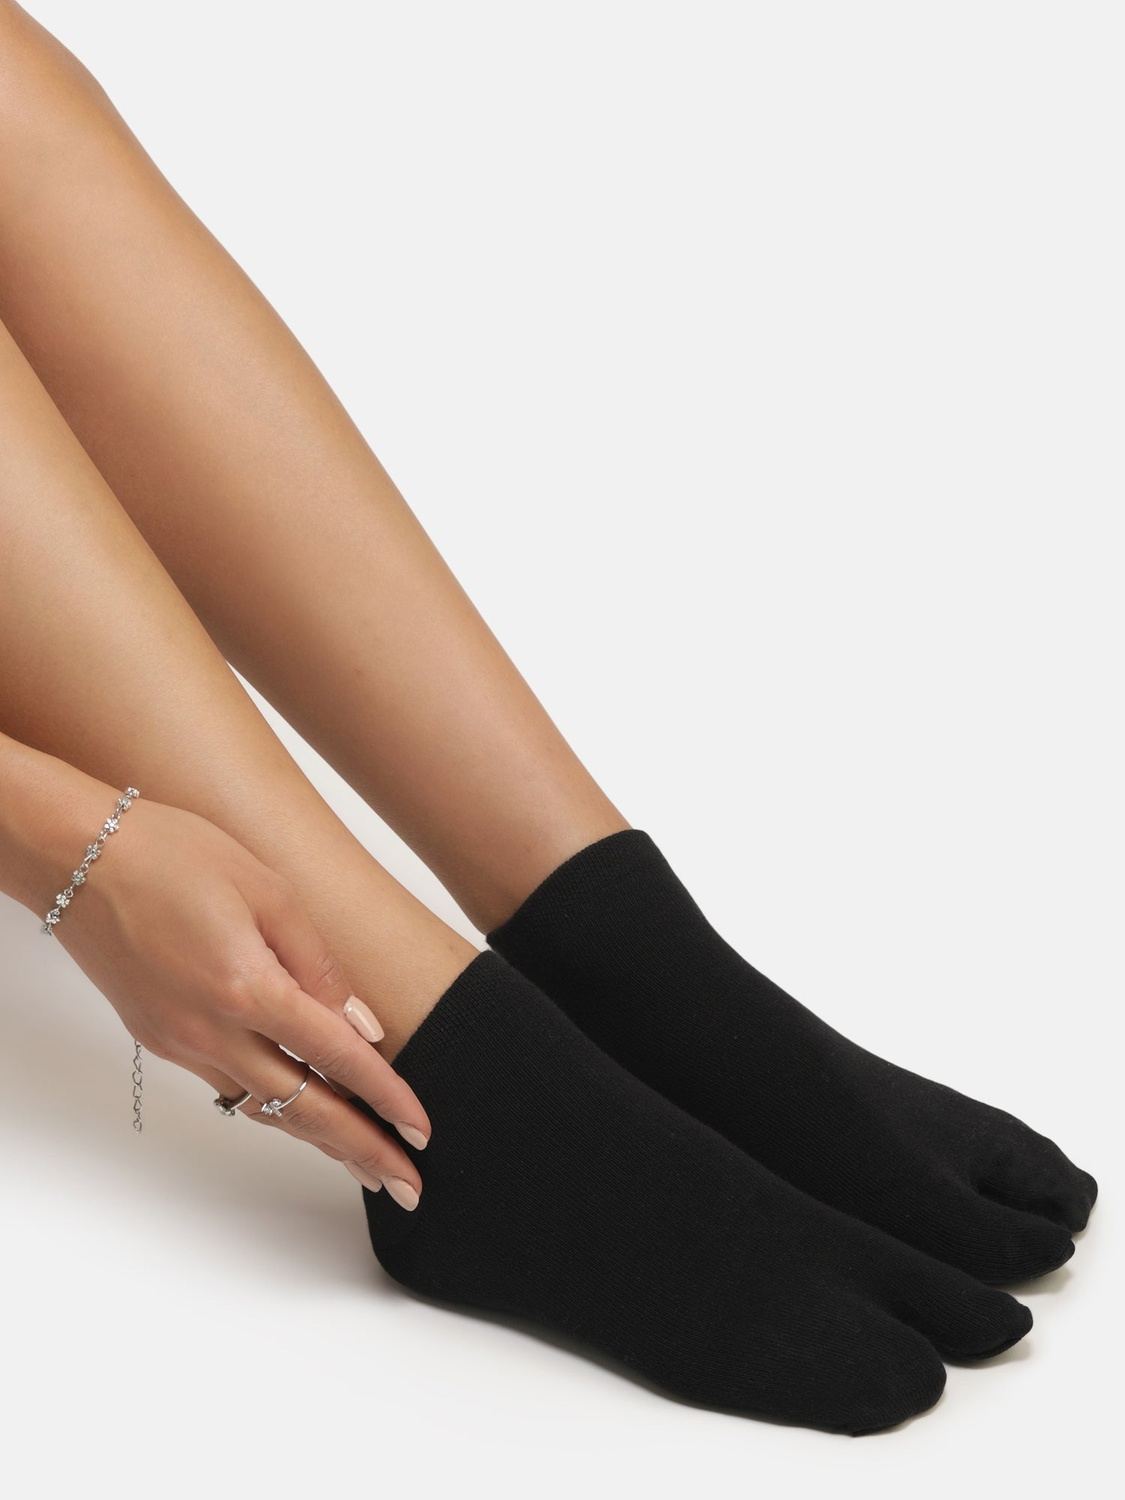 Low Ankle Length Thumb Socks- Black